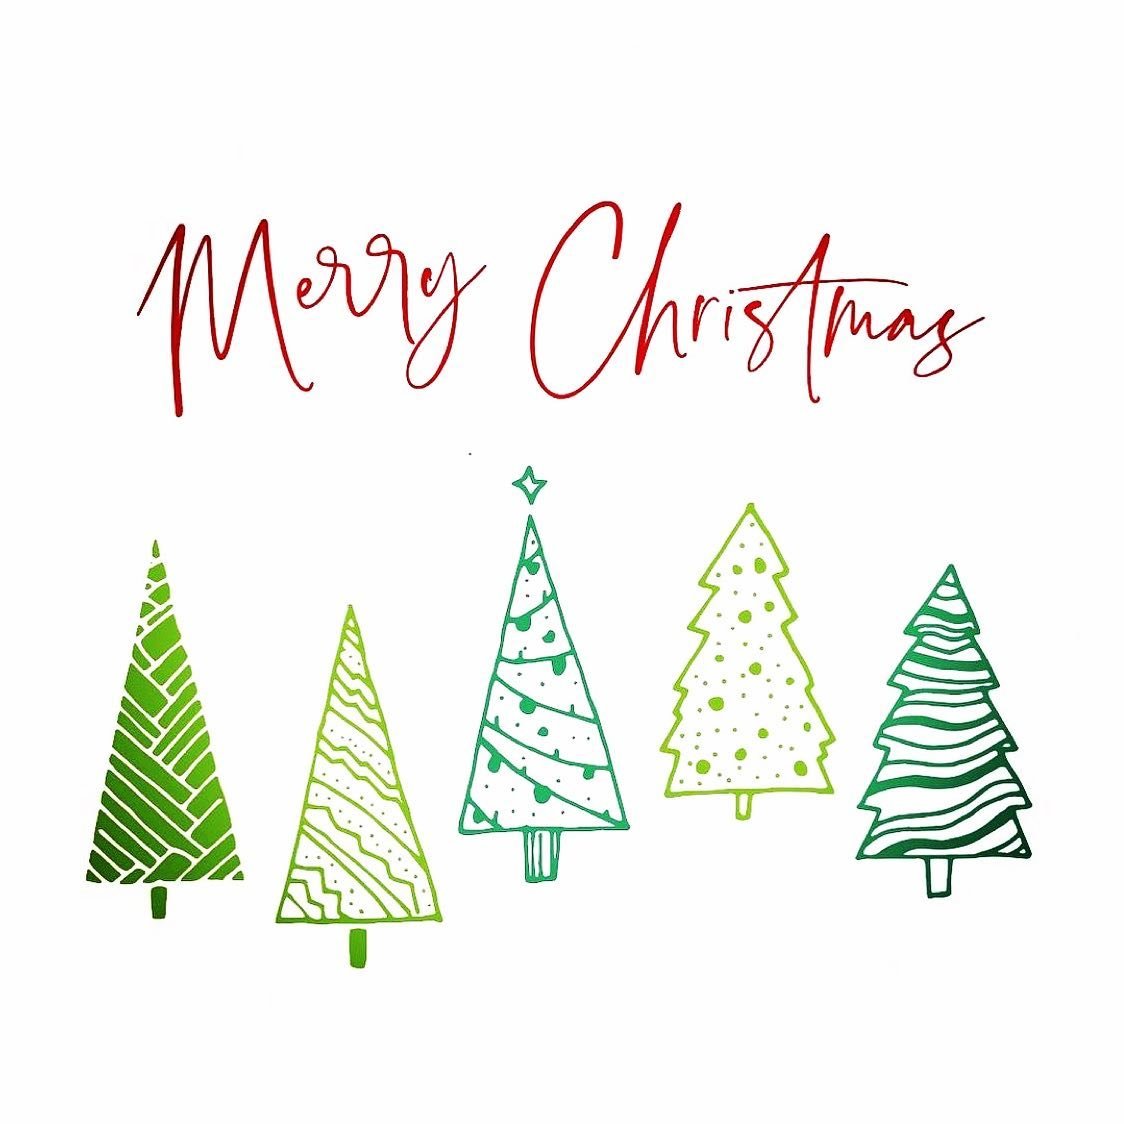 Merry Christmas, friends🎄🎅🏼🎁 

#christmastree #ochristmastree #merrychristmasyafilthyanimal #holidaze #feliznavidad